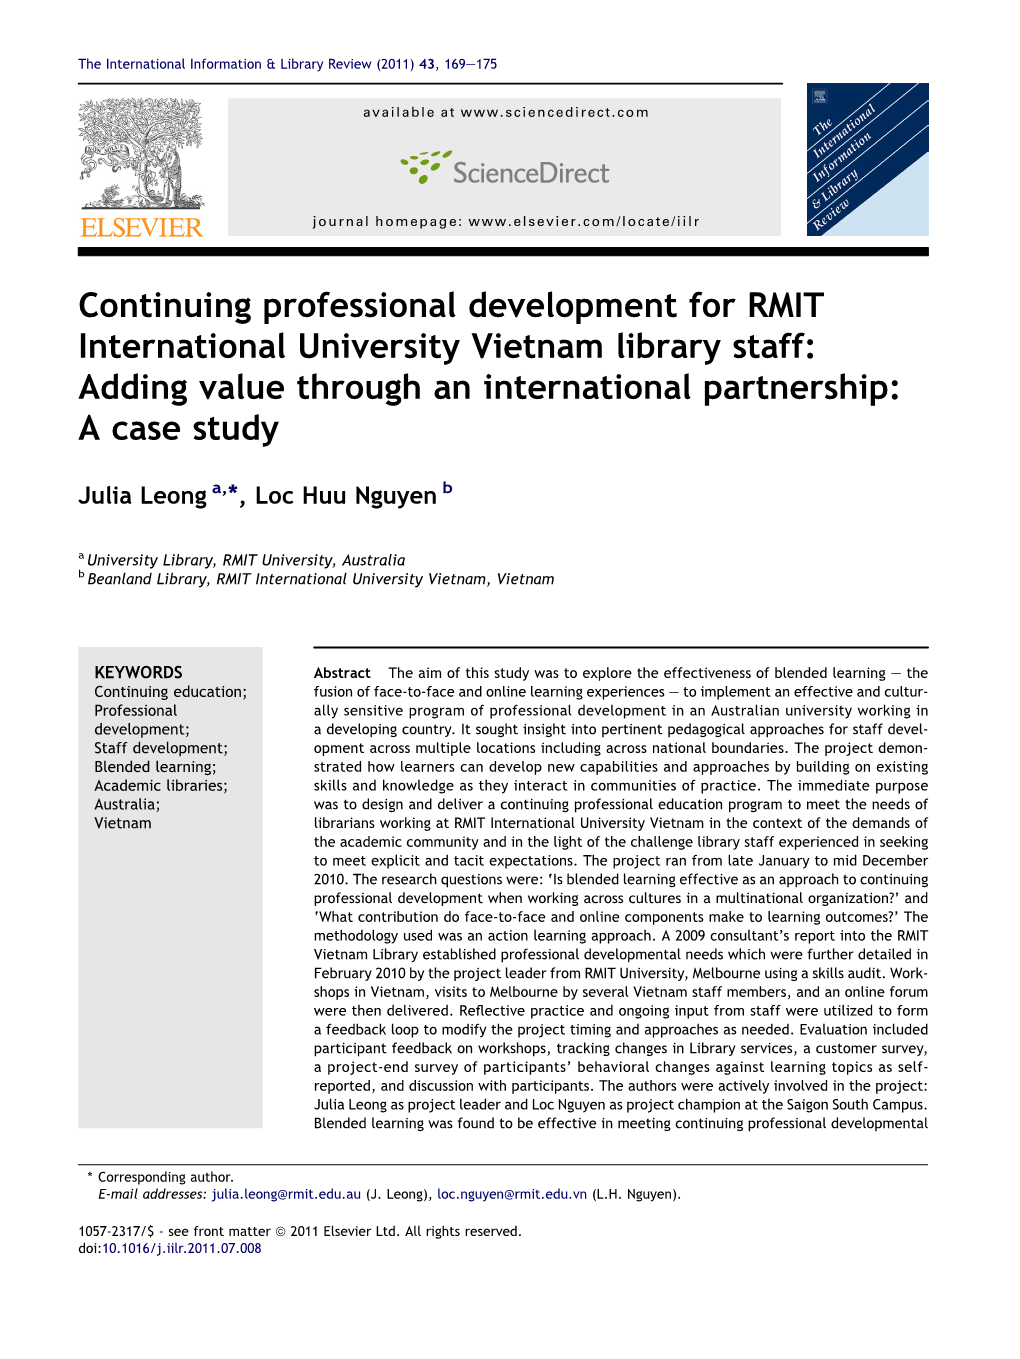 Continuing Professional Development for RMIT International University Vietnam Library Staff: Adding Value Through an International Partnership: a Case Study